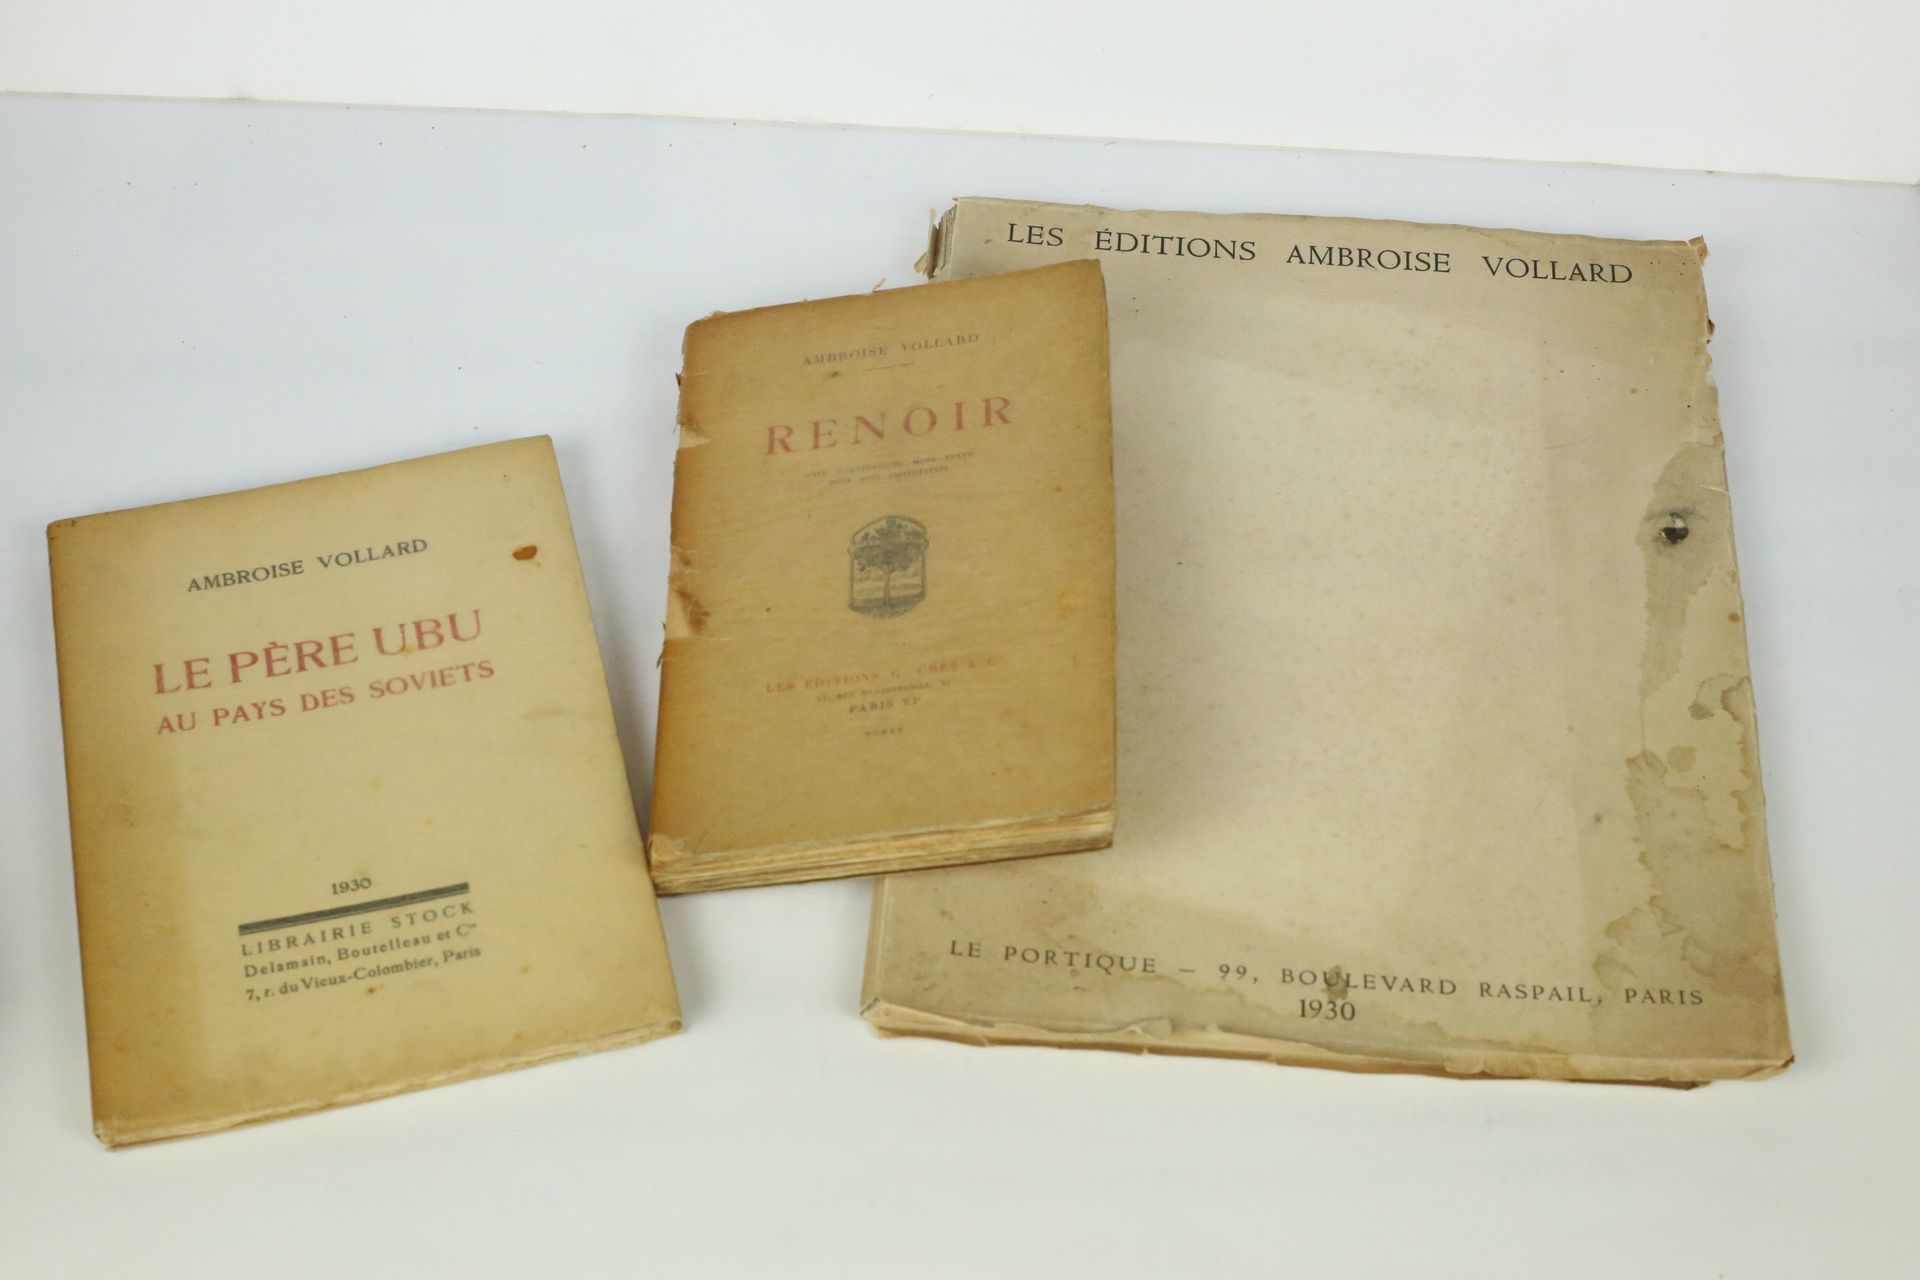 VOLLARD Ambroise Ambroise Vollard.
Lote de 3 libros.
A. Vollard " Le père Ubu au&hellip;